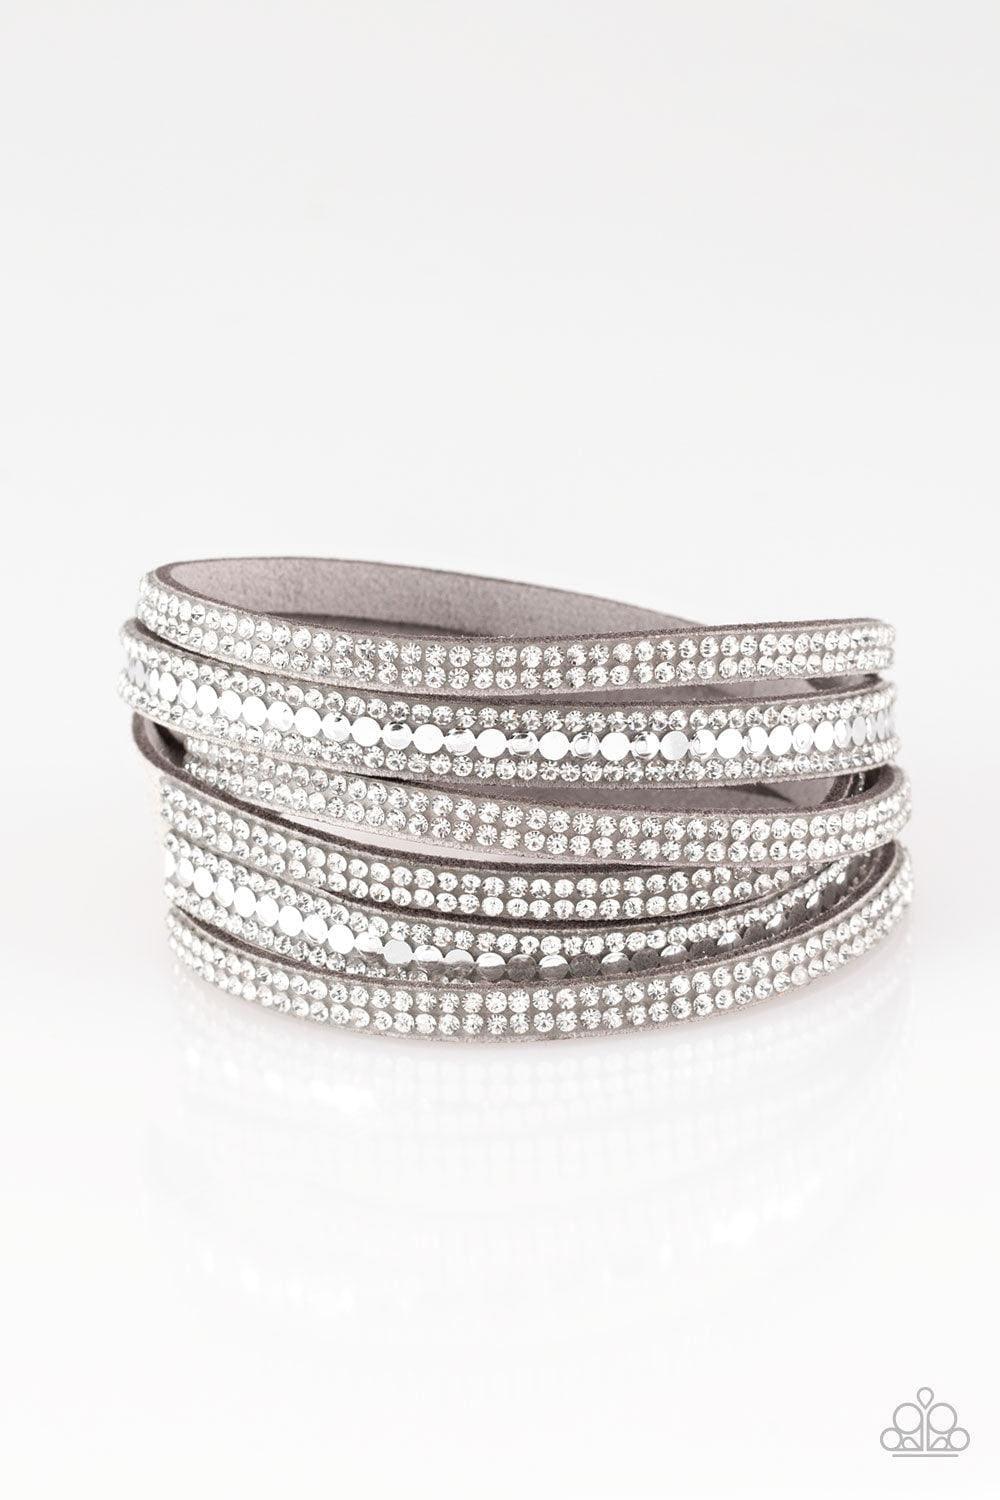 Paparazzi Accessories - Rock Star Attitude - Silver/white Double Snap Bracelet - Bling by JessieK